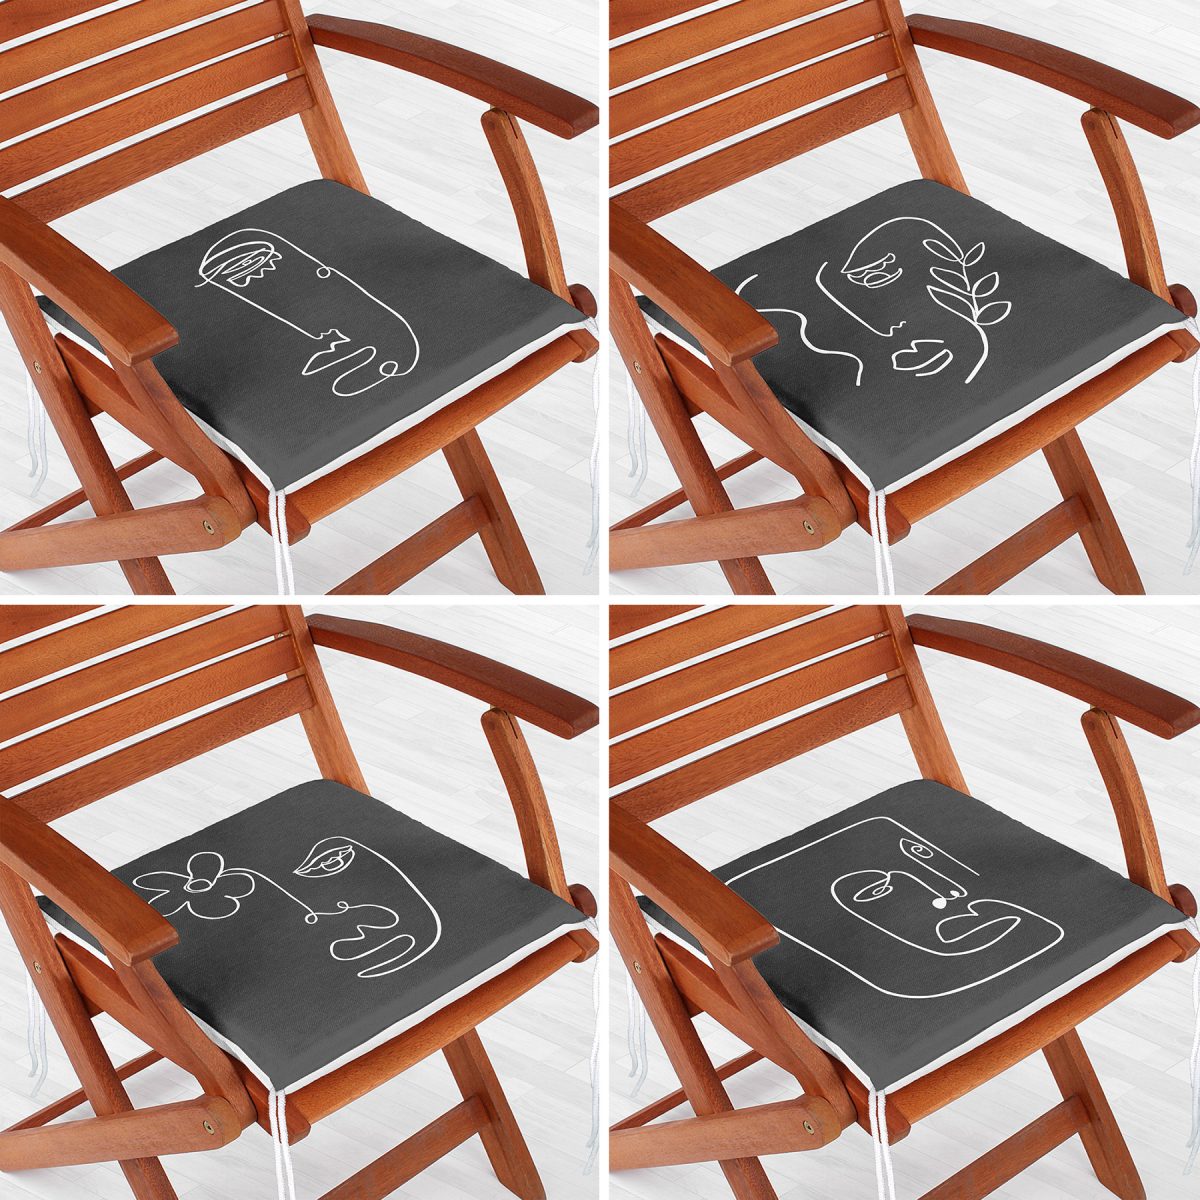 4'lü Füme Zemin Onedraw Çizimli Fermuarlı Sandalye Minderi Seti Realhomes